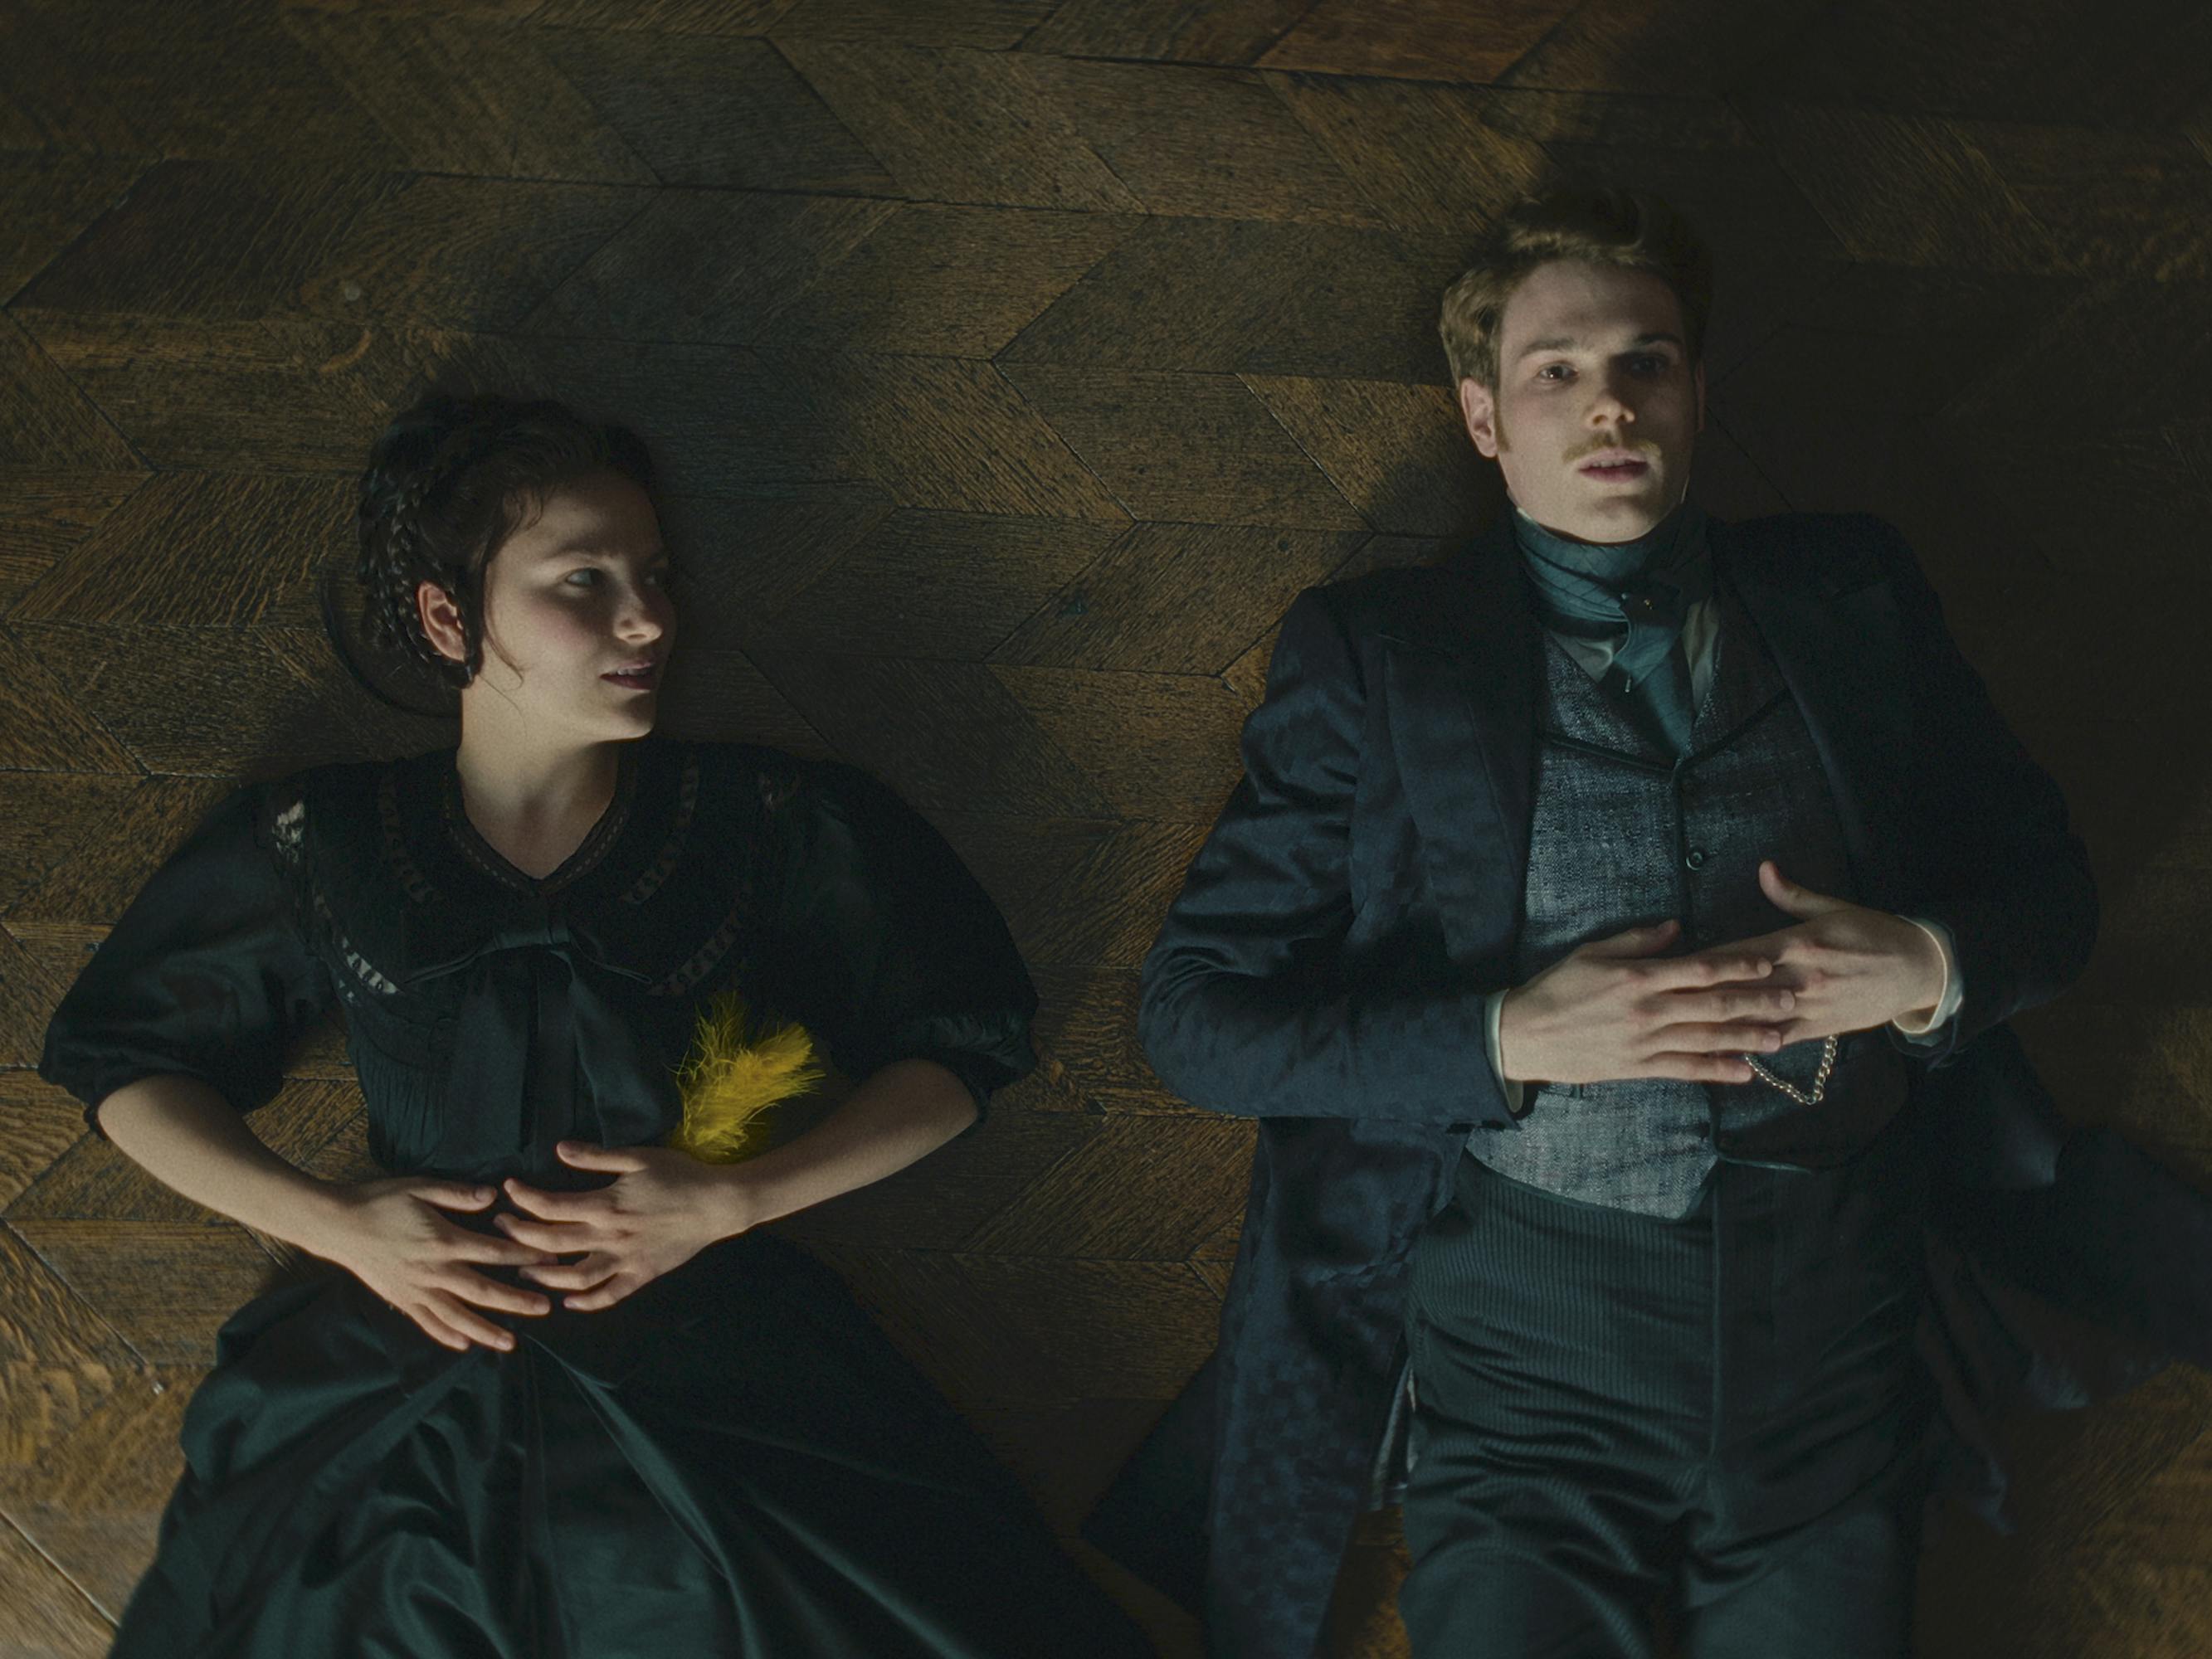 Elisabeth (Devrim Lingnau) and Franz (Philip Froissant) lie together on a cold stone ground.